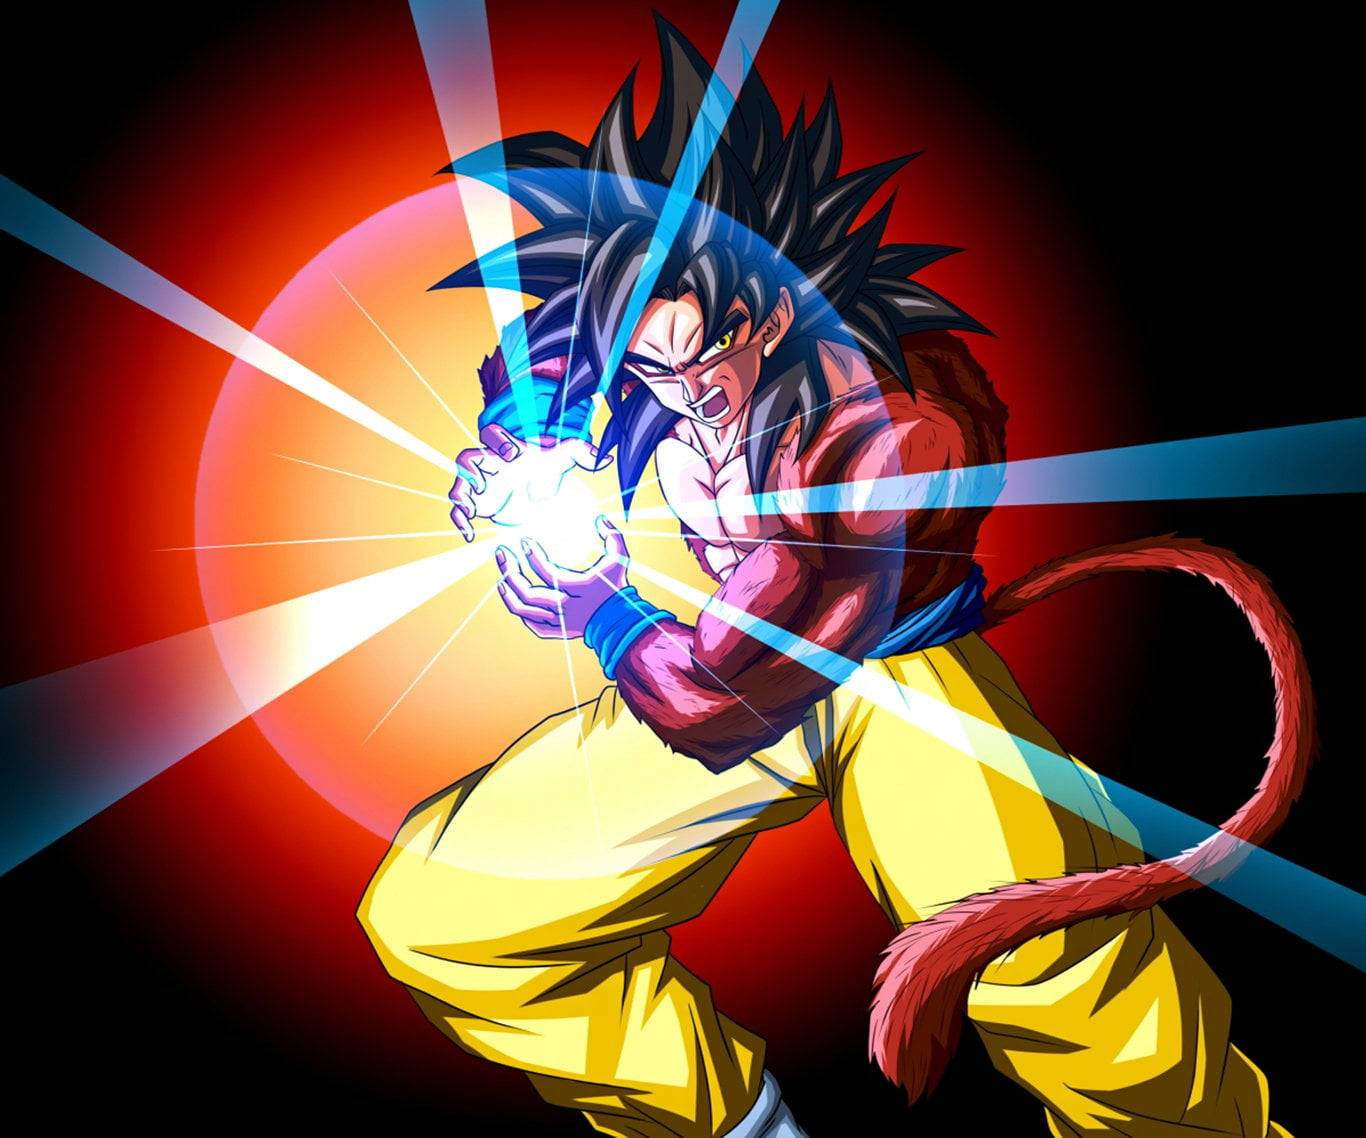 Ssj4 Goku White Energy Ball